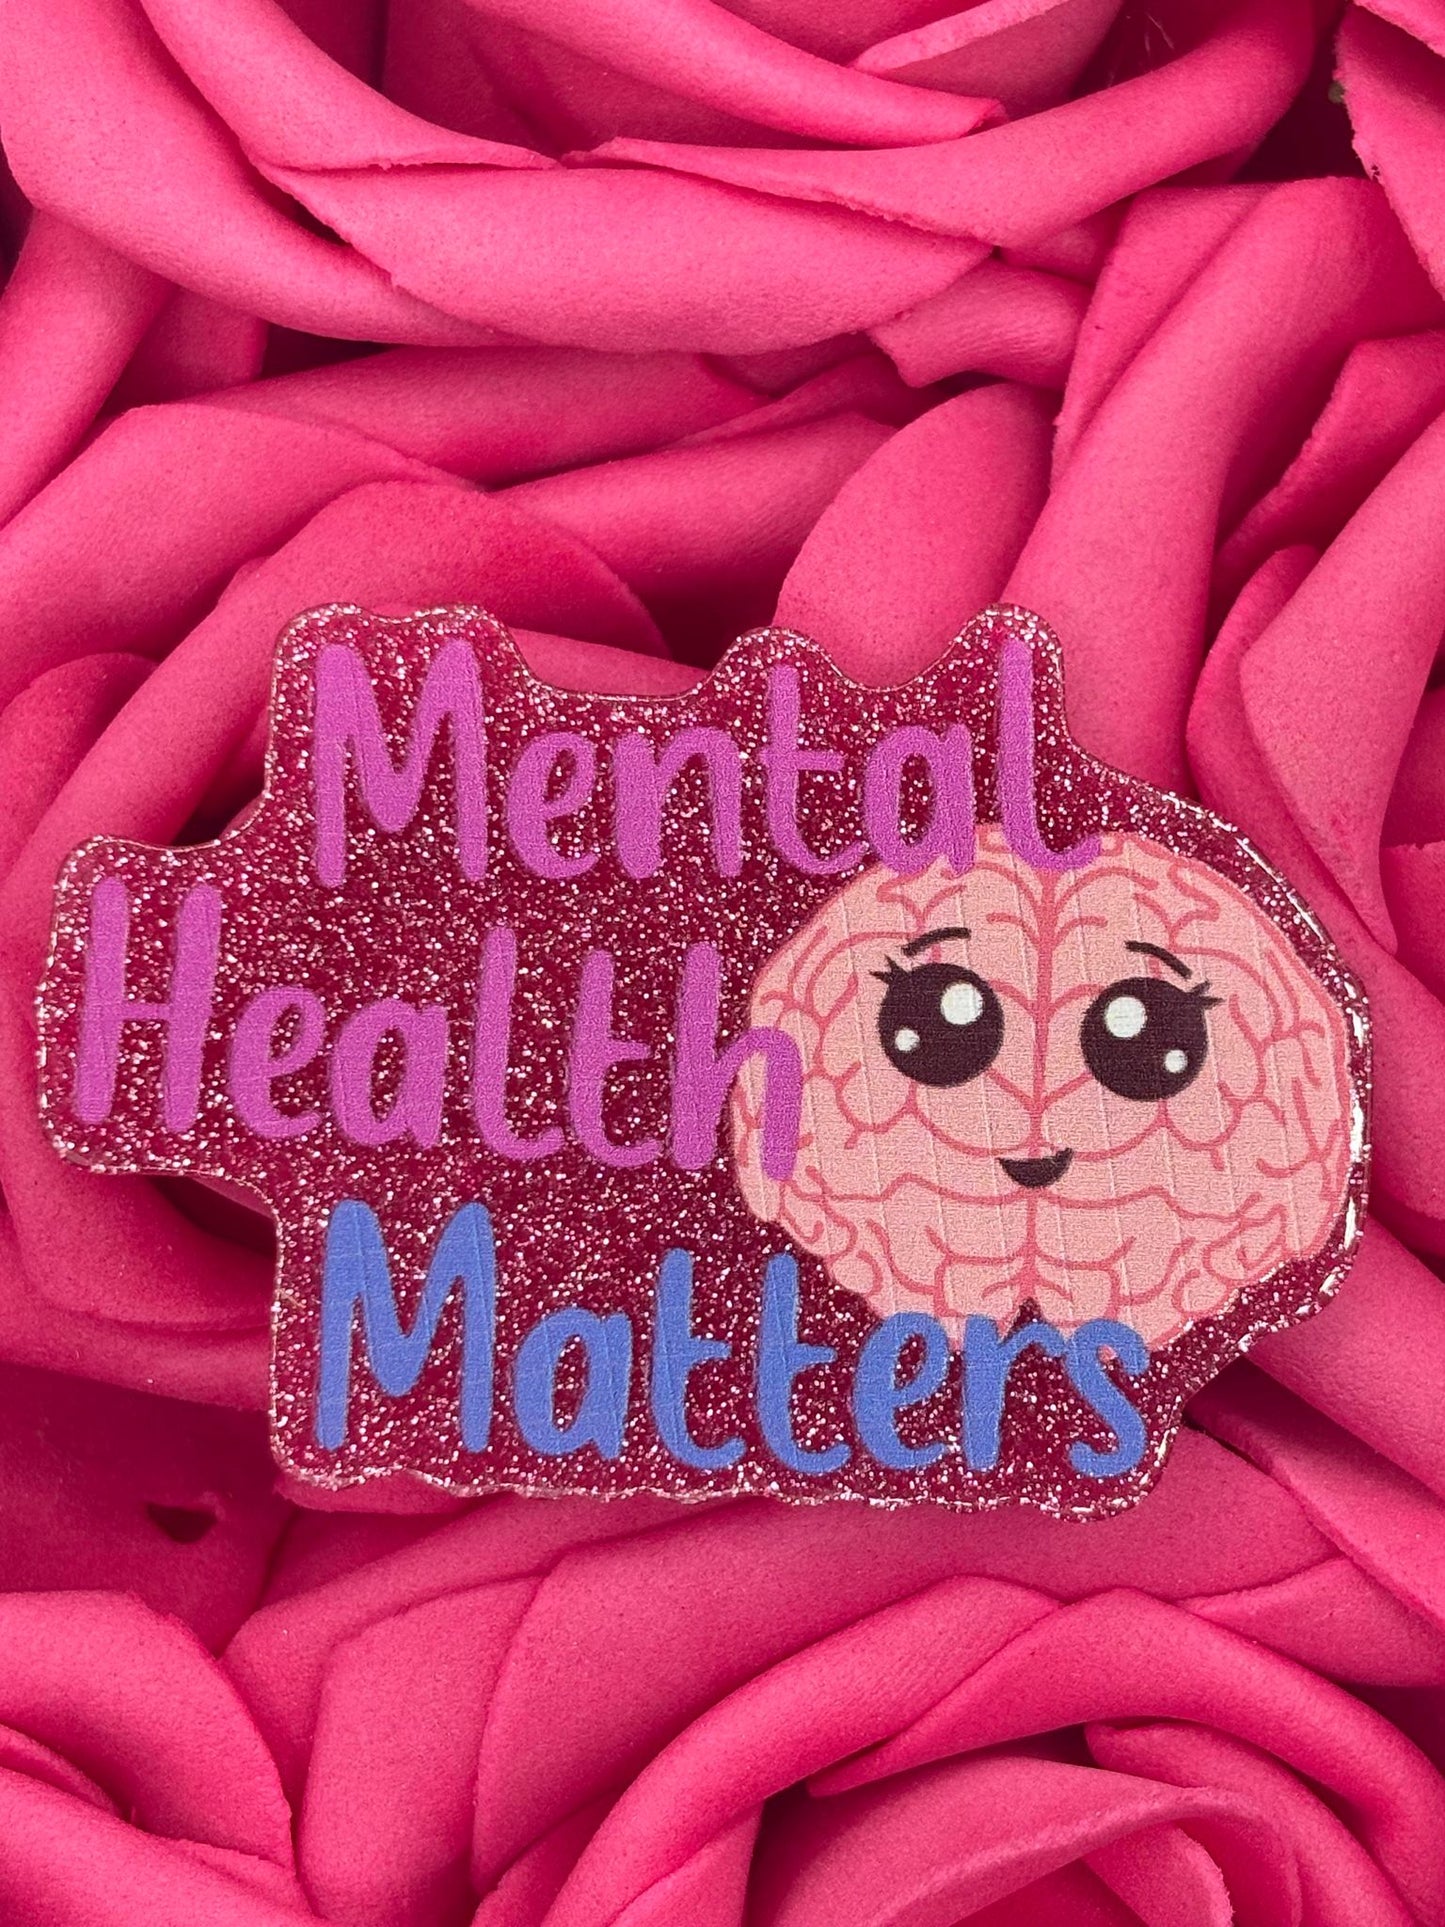 #2188 Mental Health Matters